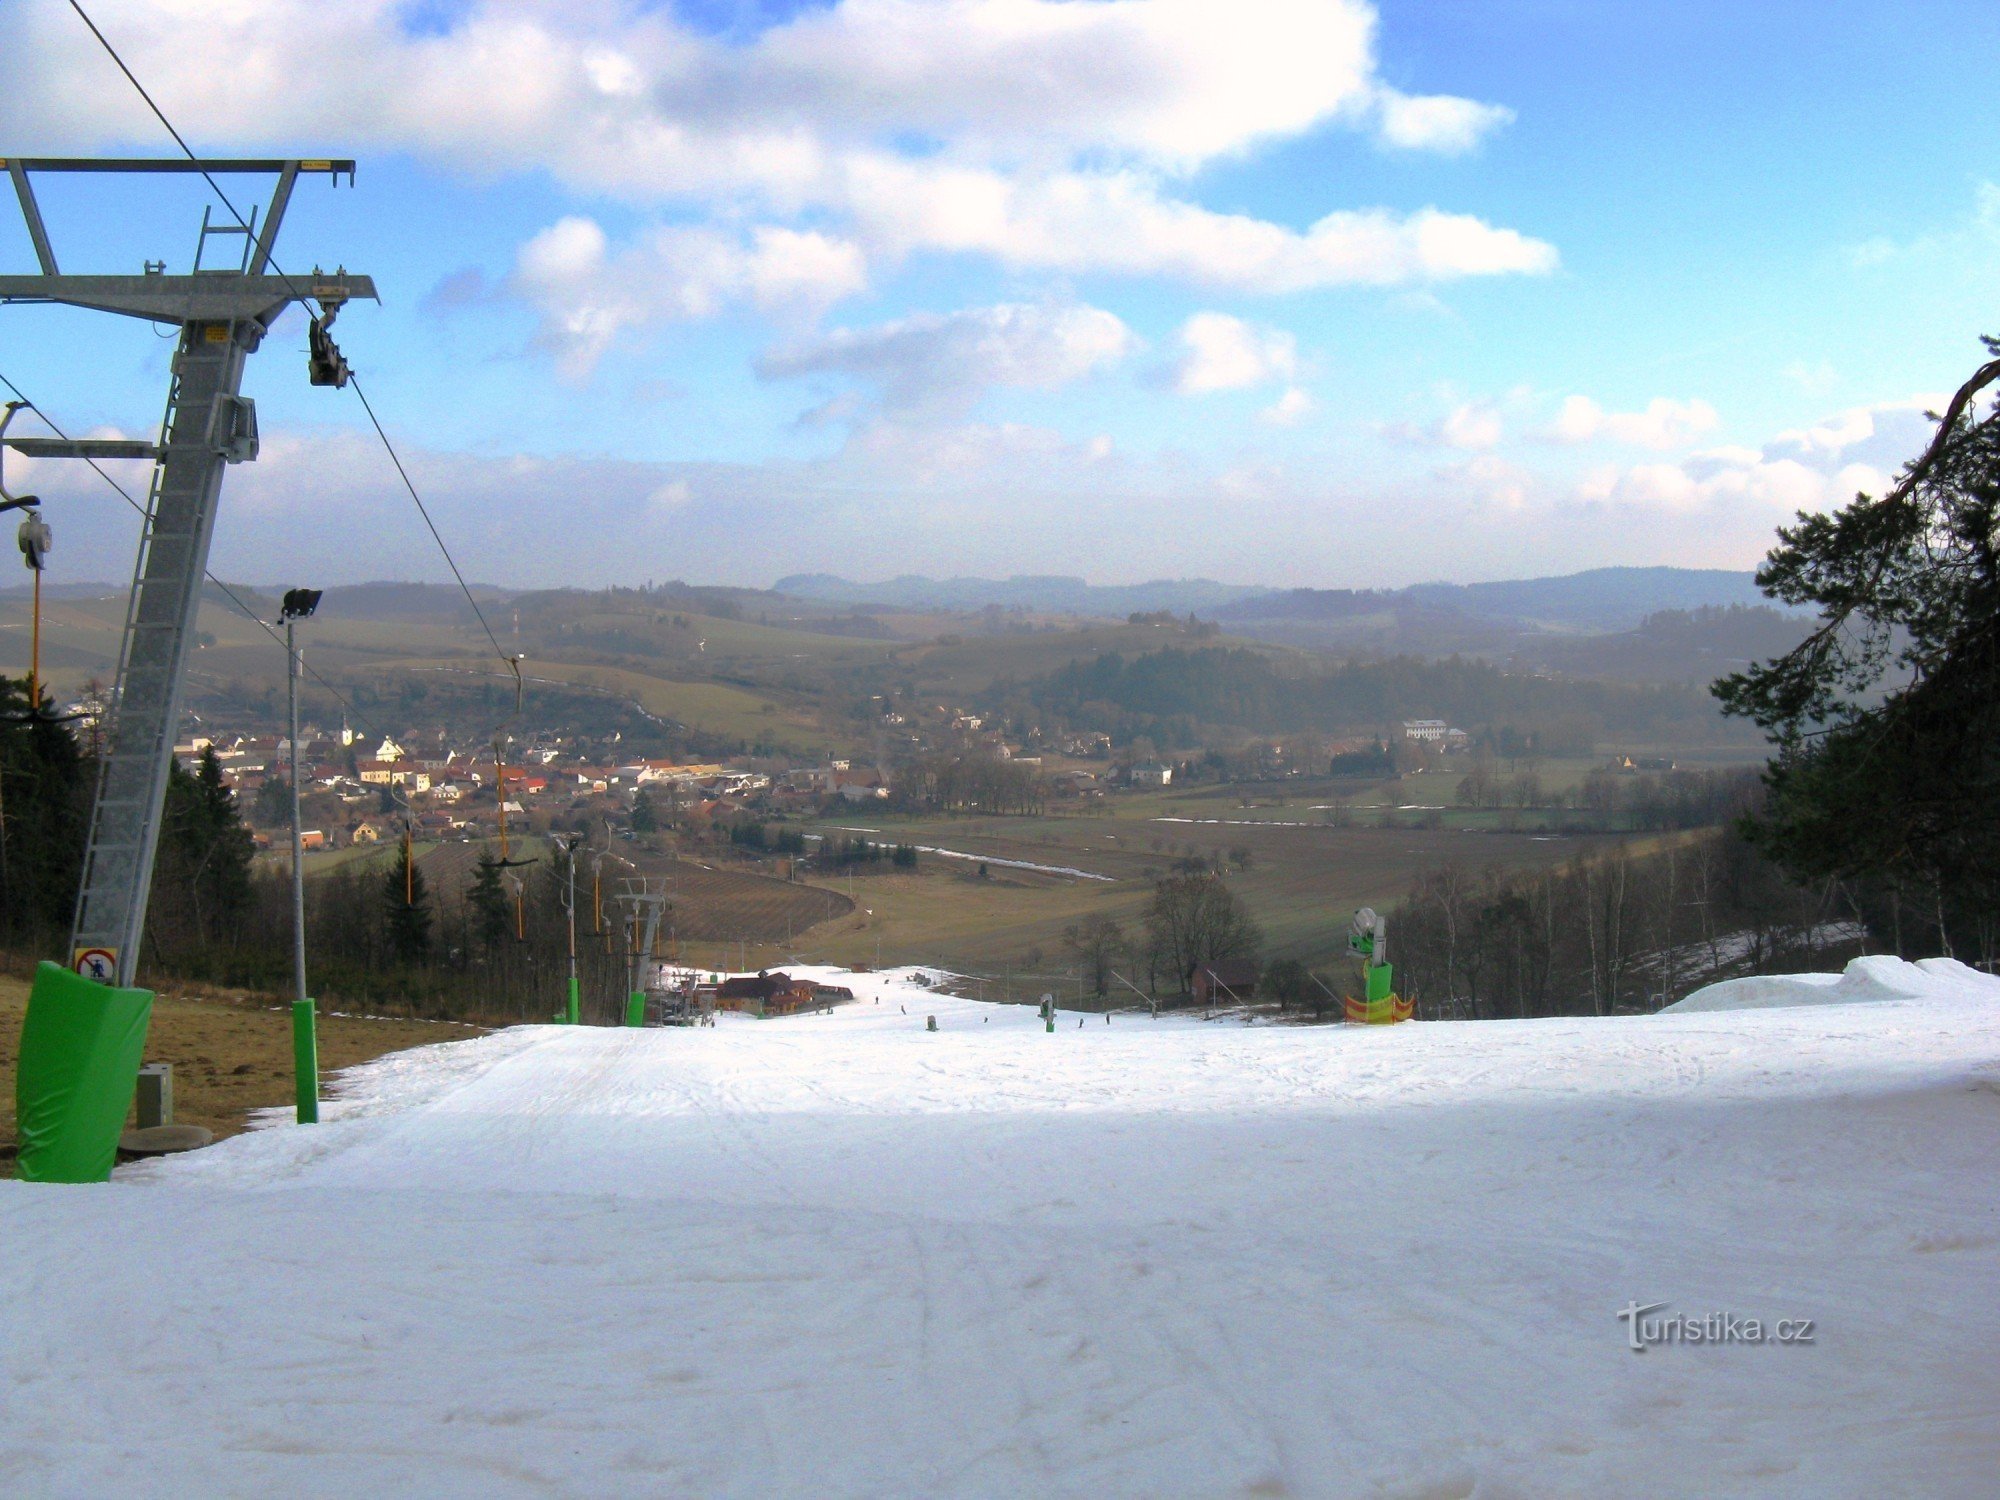 Olešnice - ski slope